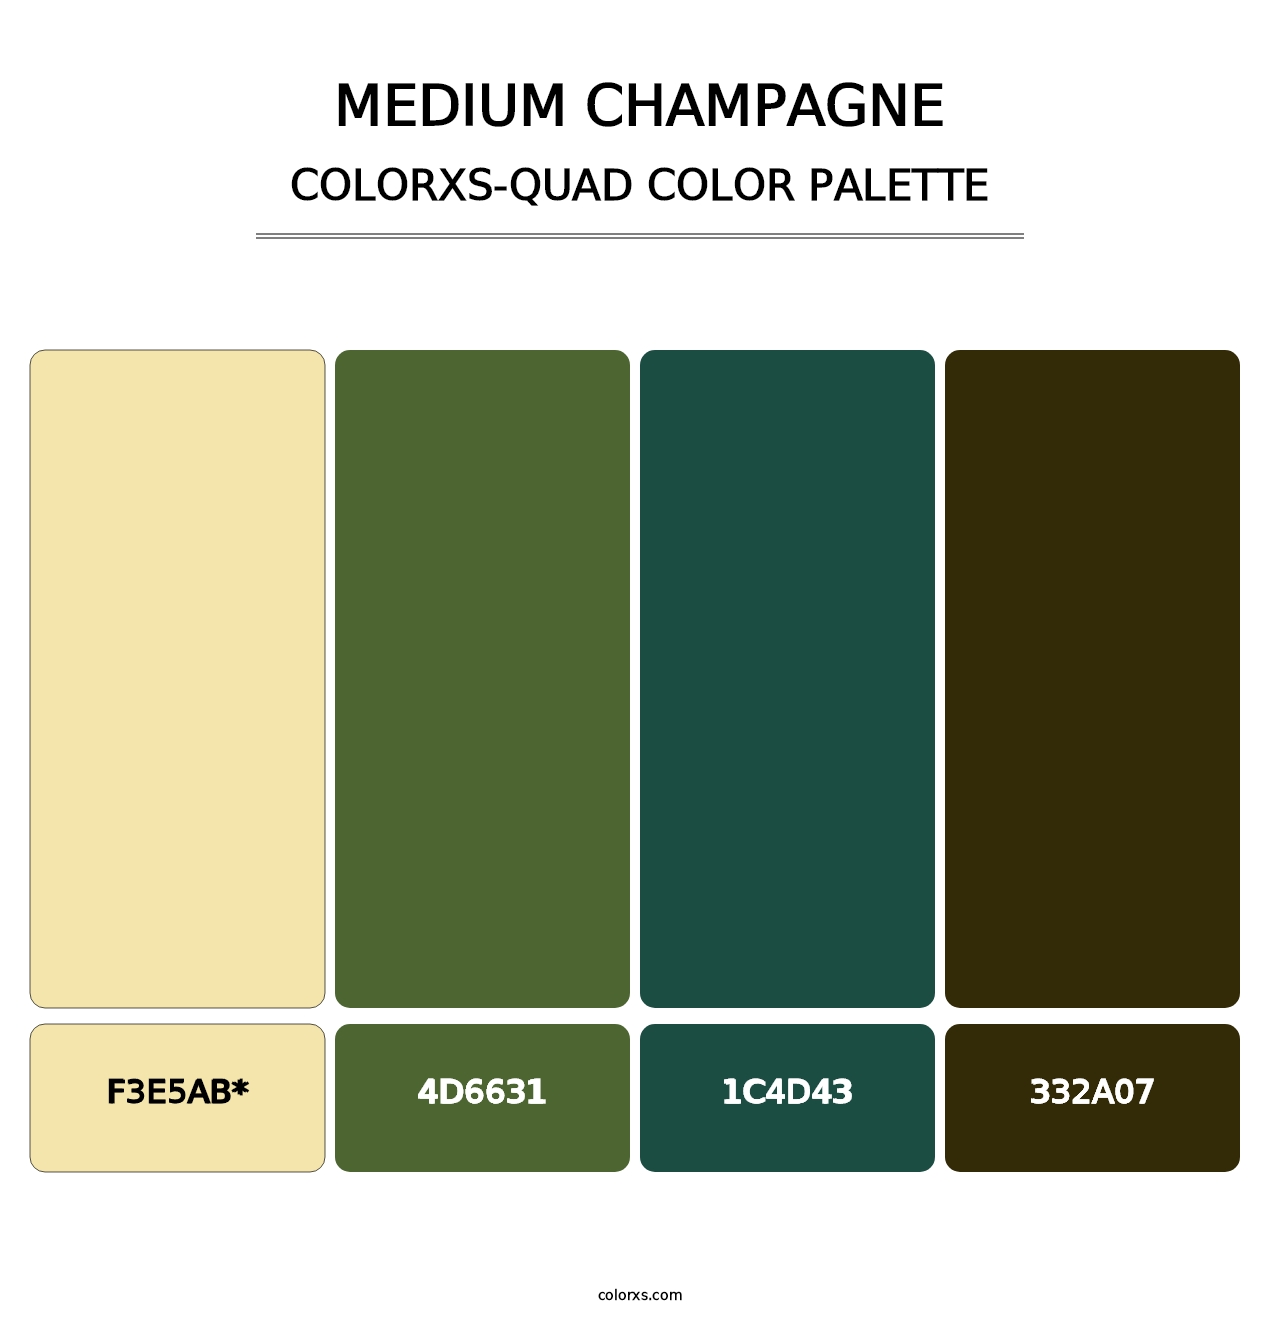 Medium Champagne - Colorxs Quad Palette